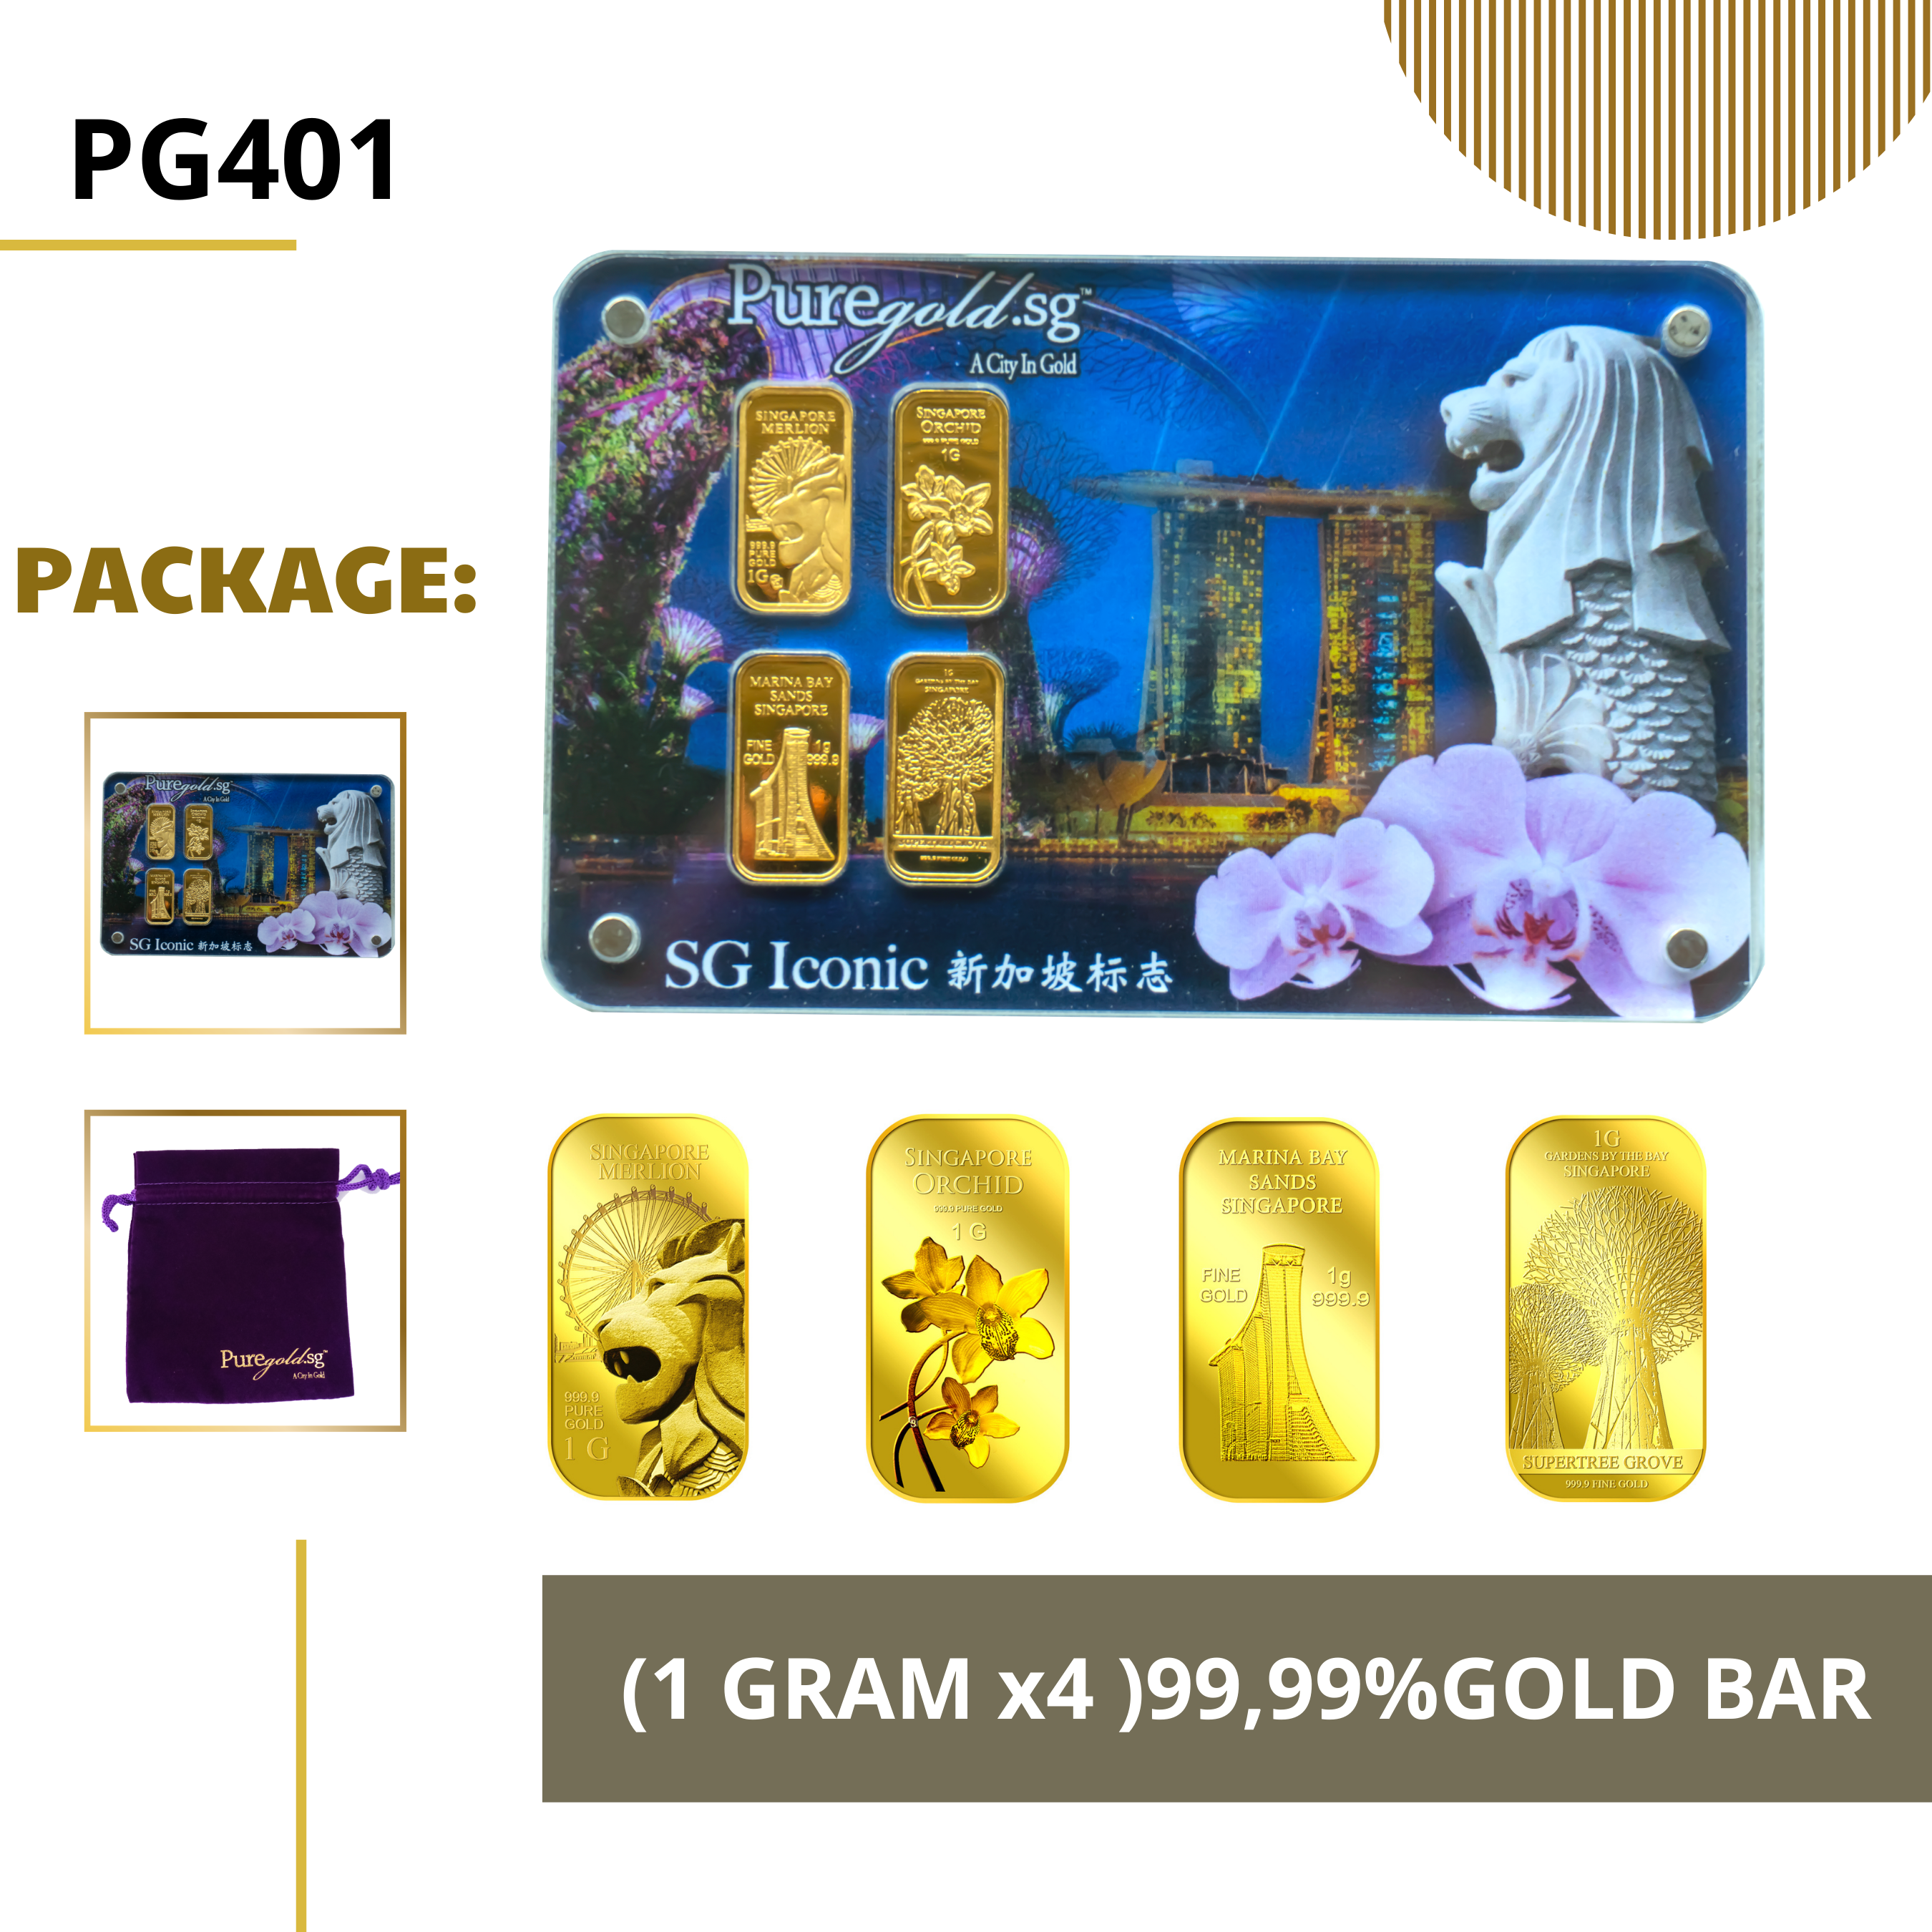 PURE GOLD 99.99% ทองคำแท่ง / 1g x 4 Merlion flyer - Orchid S2 - Marina Bay Sand- Supertree / ทองคำแท้จากสิงคโปร์ / ทองคำ 1 กรัม x4  / ทอง 99.99% *การันตีทองแท้*